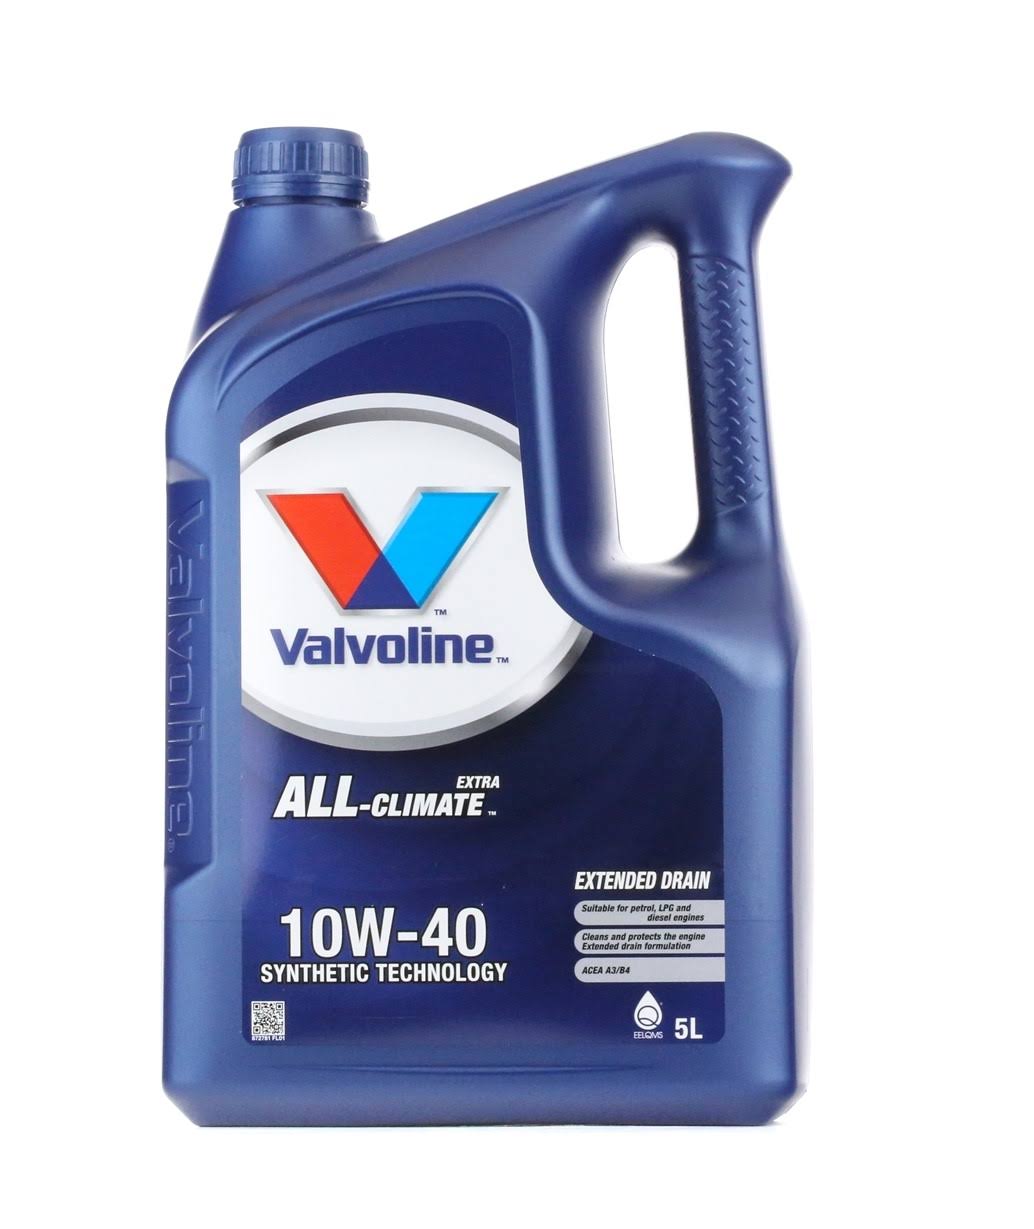 Valvoline All Climate Extra Motor Oil 10W-40